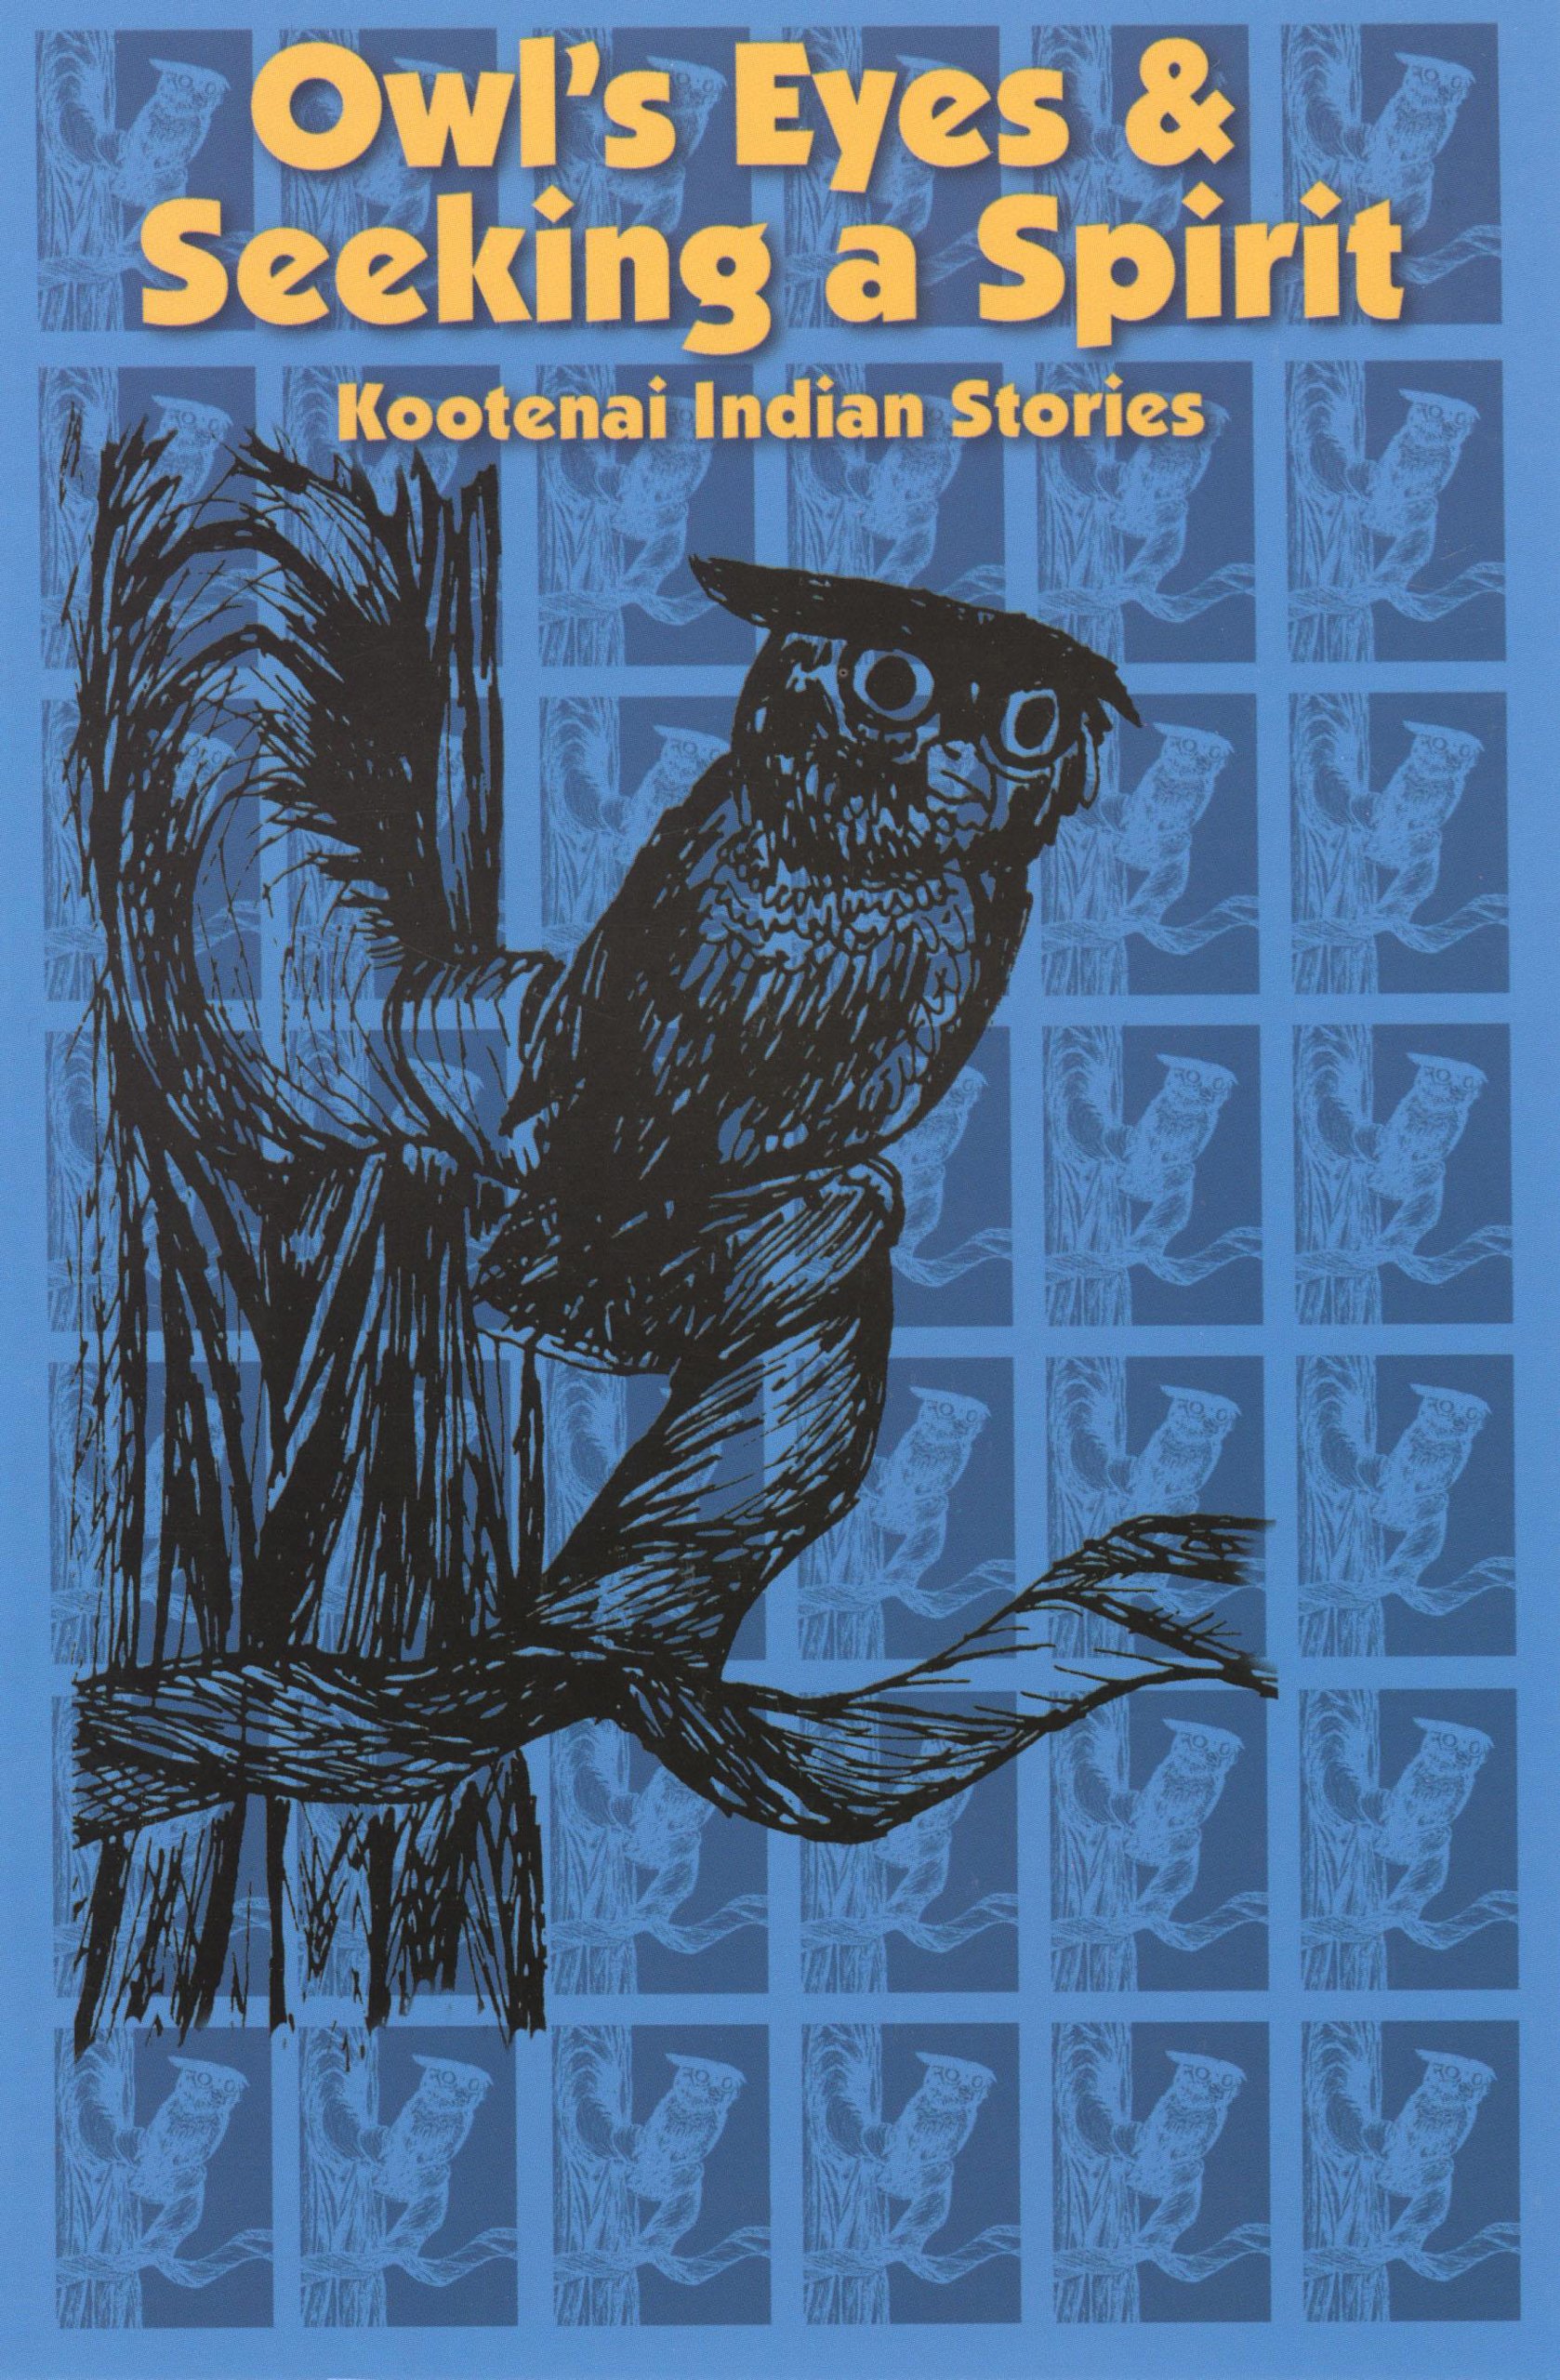 Owl's eyes & Seeking a spirit: Kootenai Indian stories (book cover)